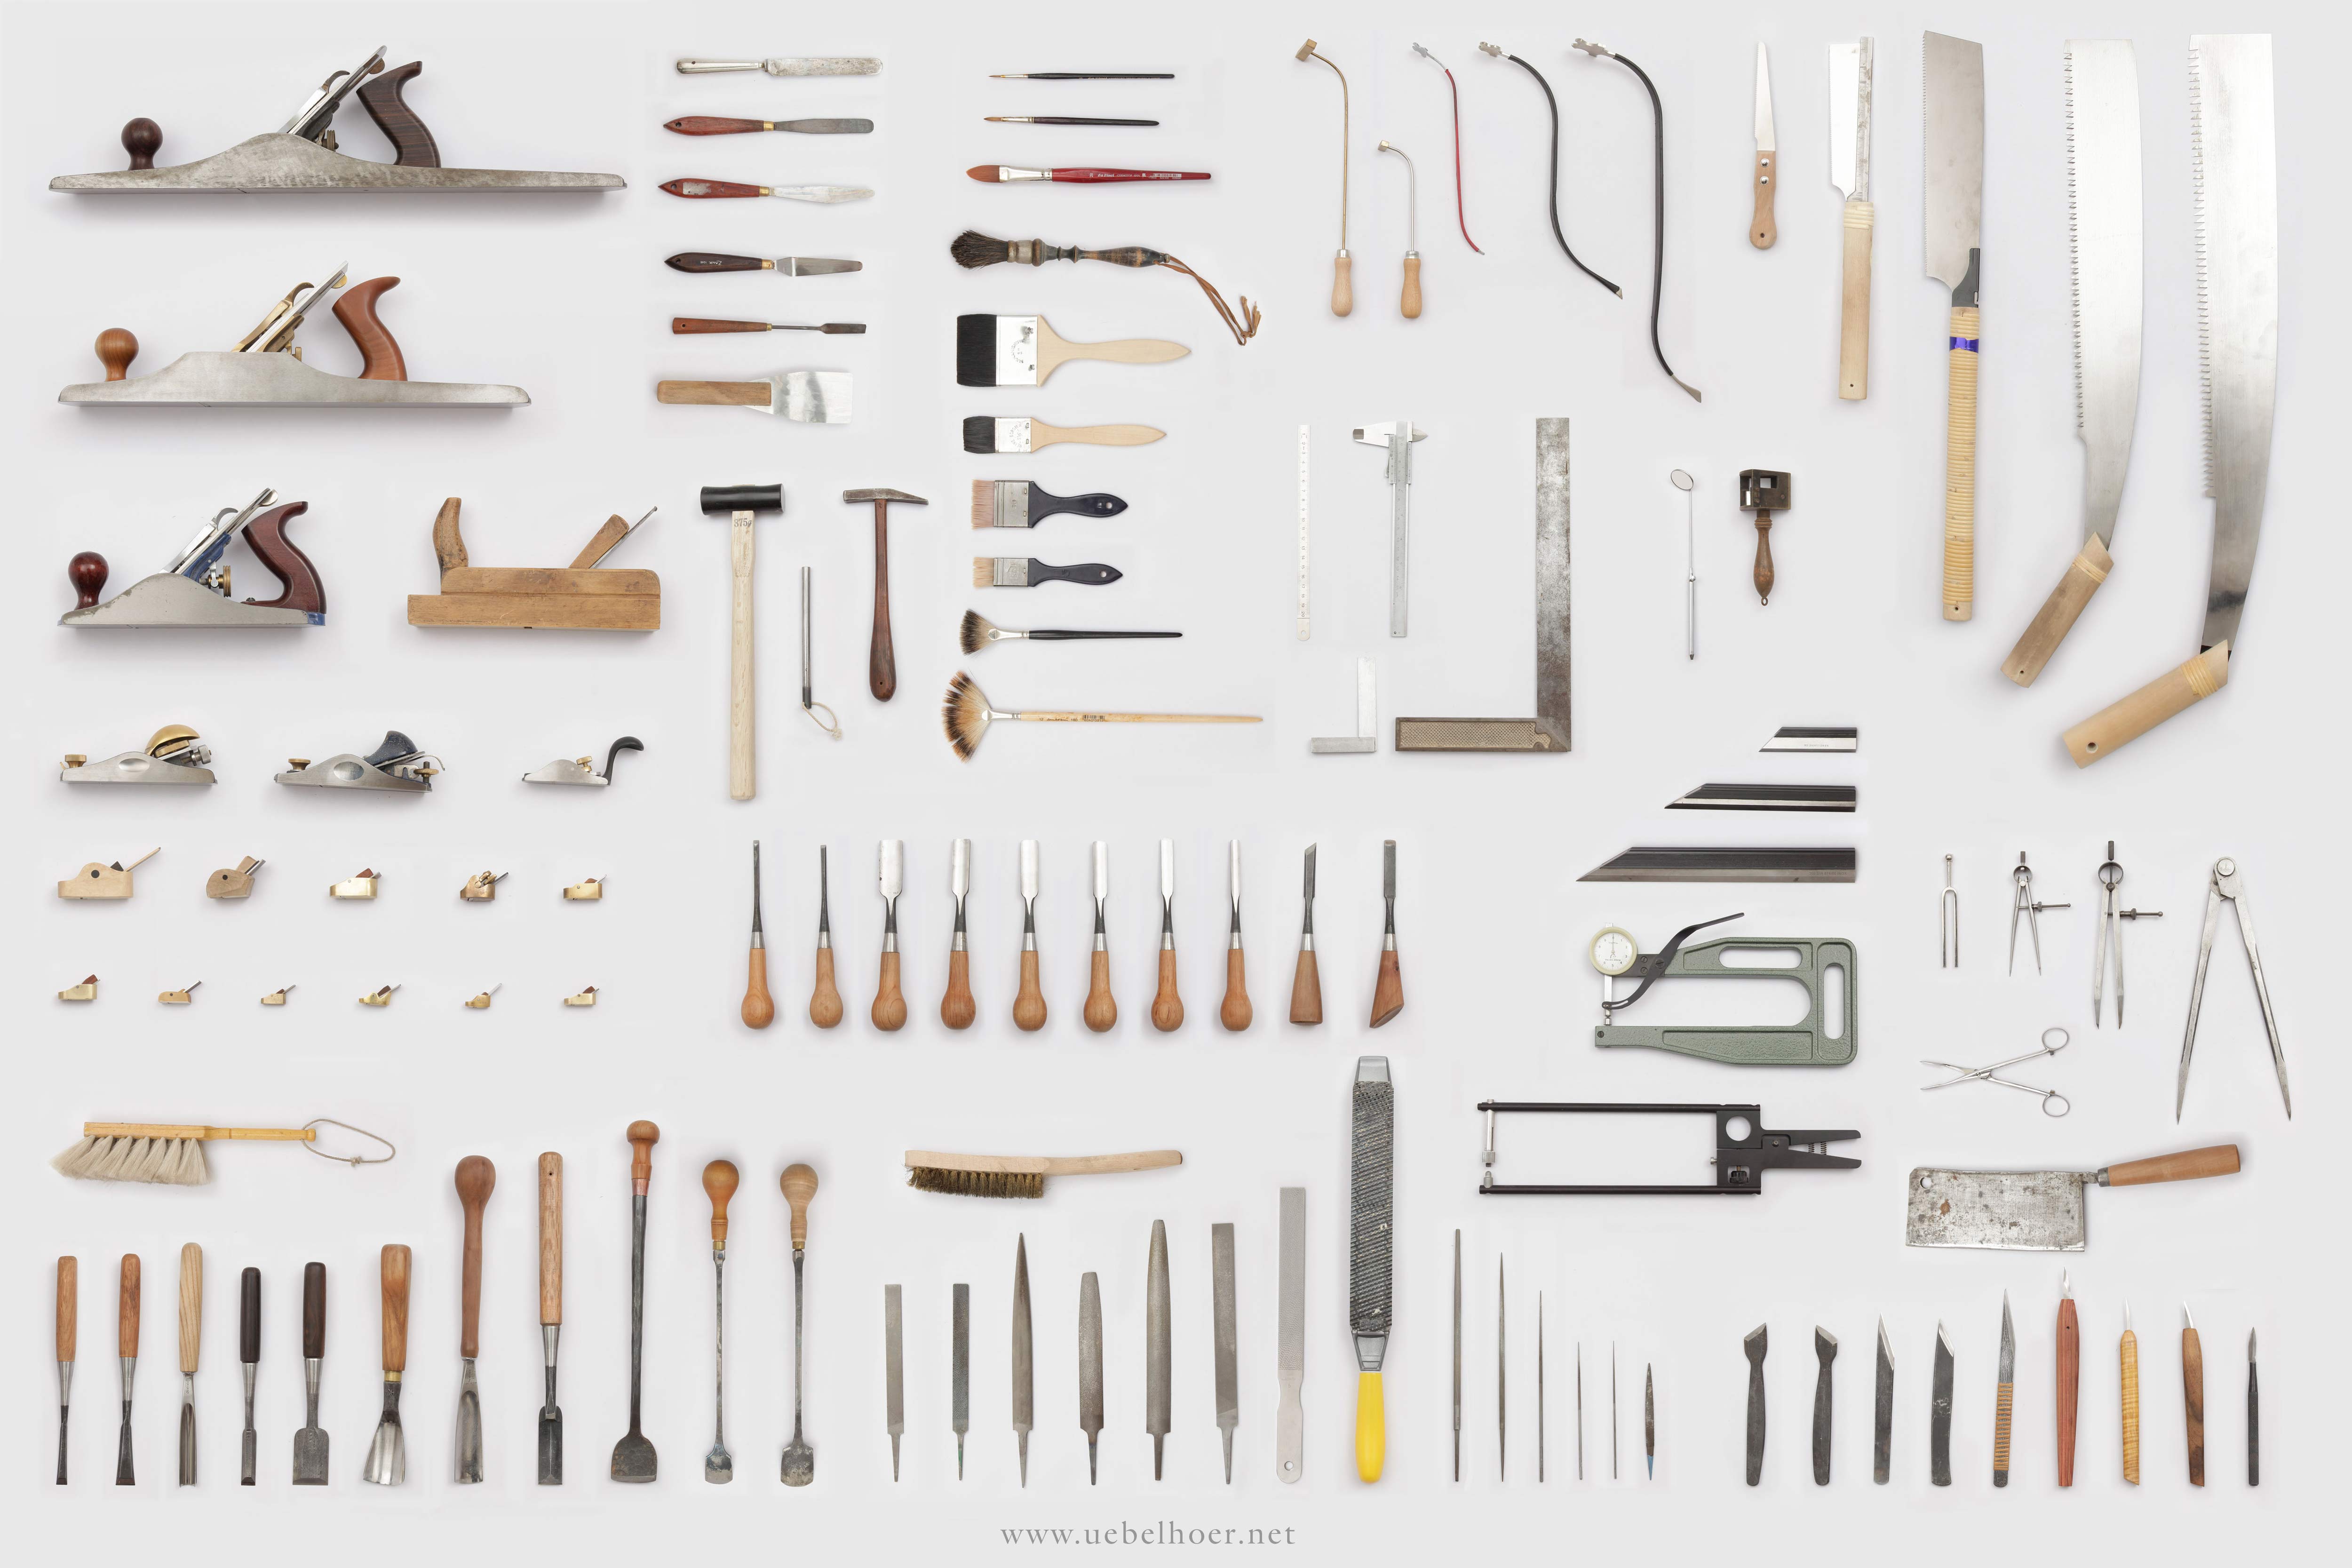 Poster showing arrangement of all tools from violin maker's workshop.